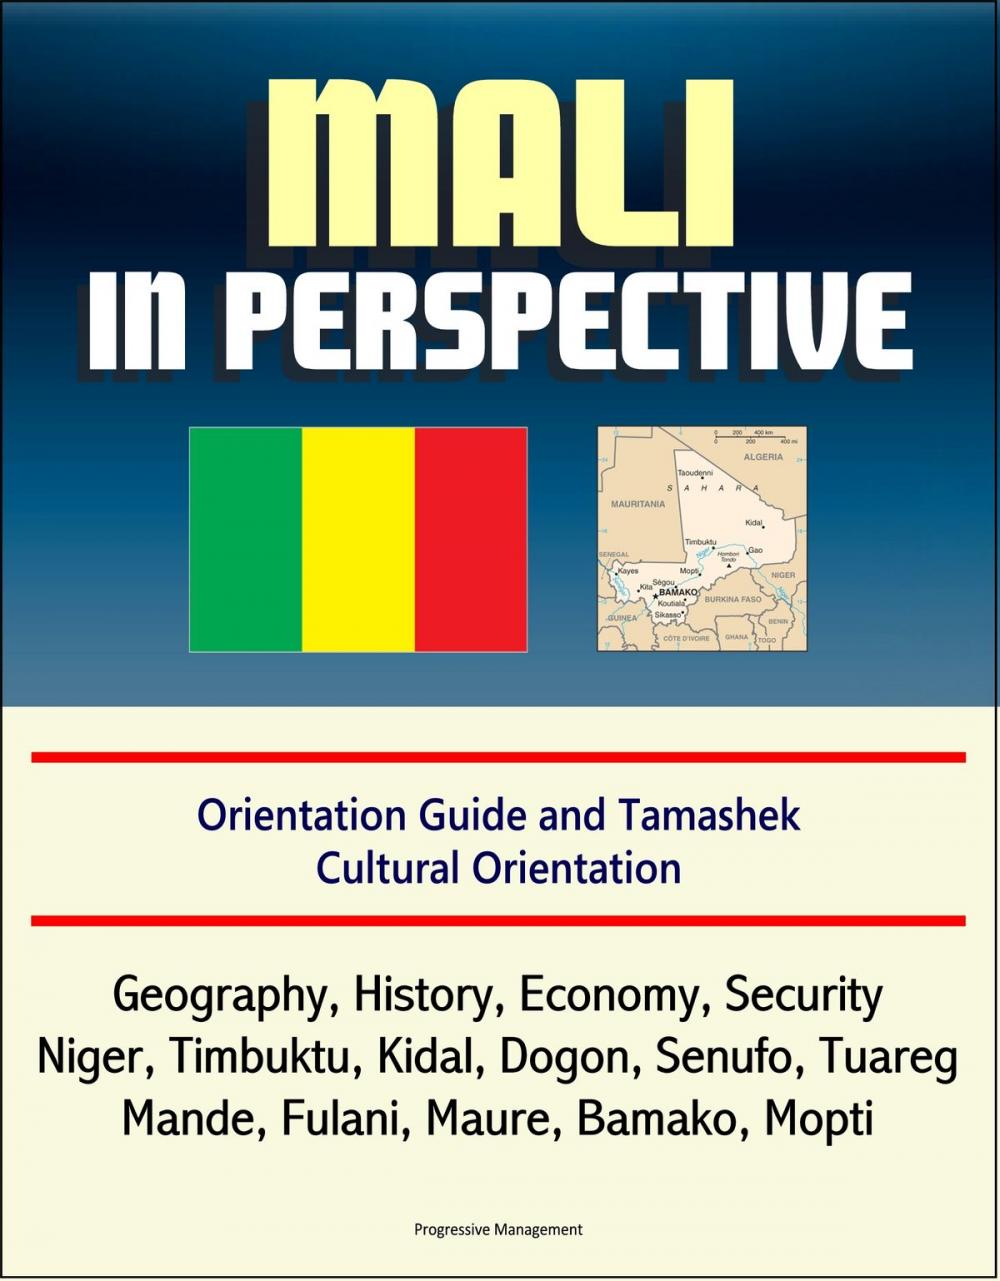 Big bigCover of Mali in Perspective: Orientation Guide and Tamashek Cultural Orientation: Geography, History, Economy, Security, Niger, Timbuktu, Kidal, Dogon, Senufo, Tuareg, Mande, Fulani, Maure, Bamako, Mopti